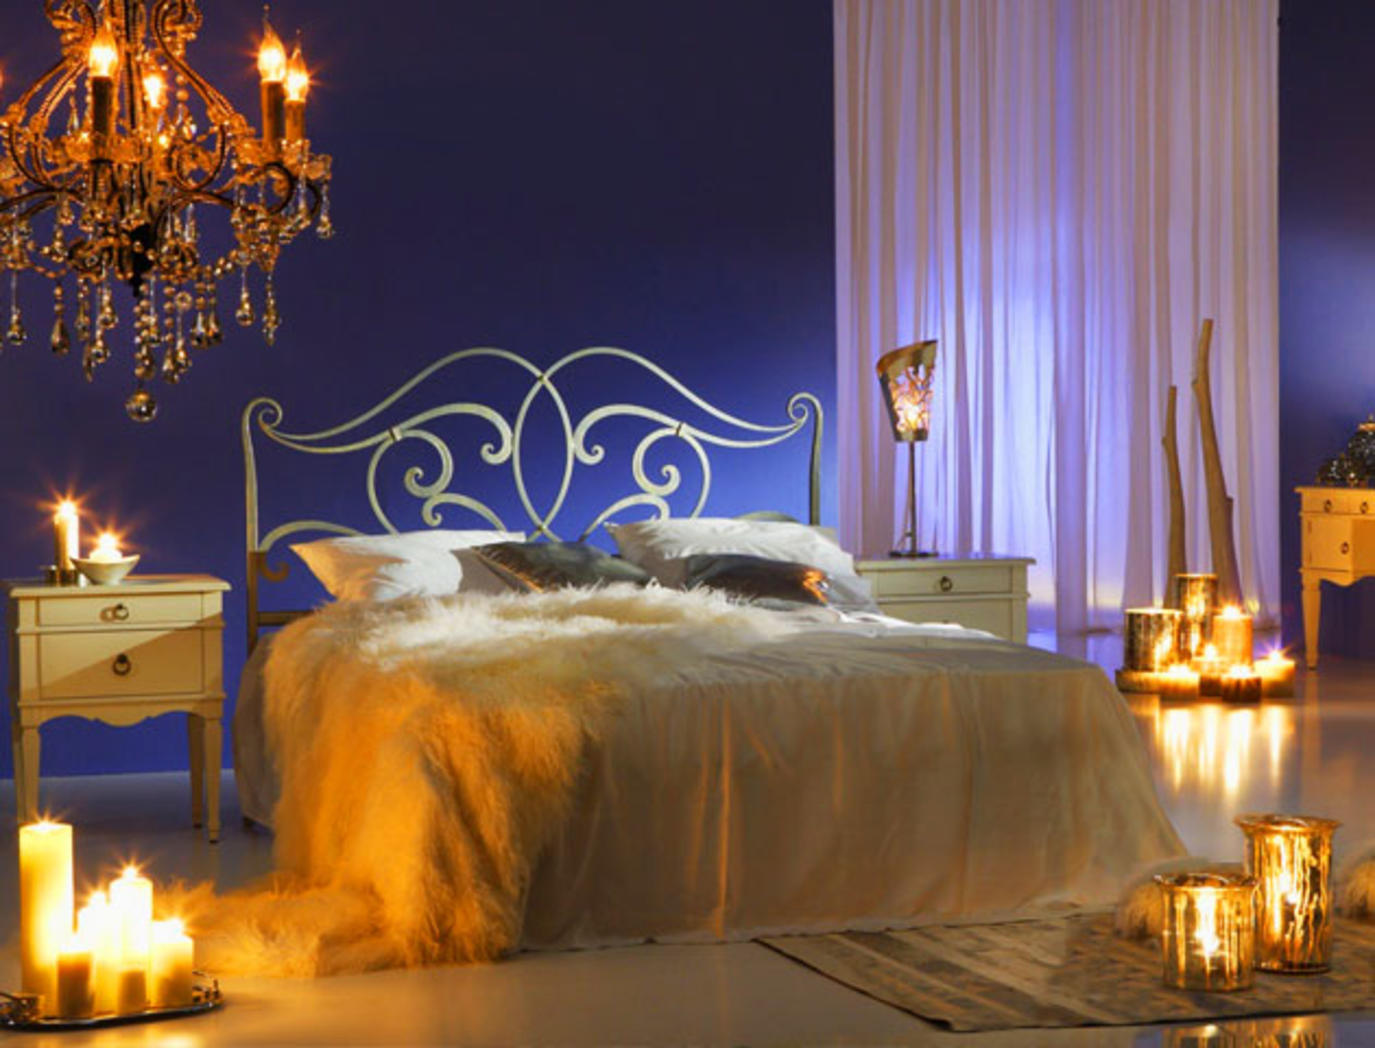 wedding bedroom decoration ideas | wedding bedroom decoration with flowers  - YouTube